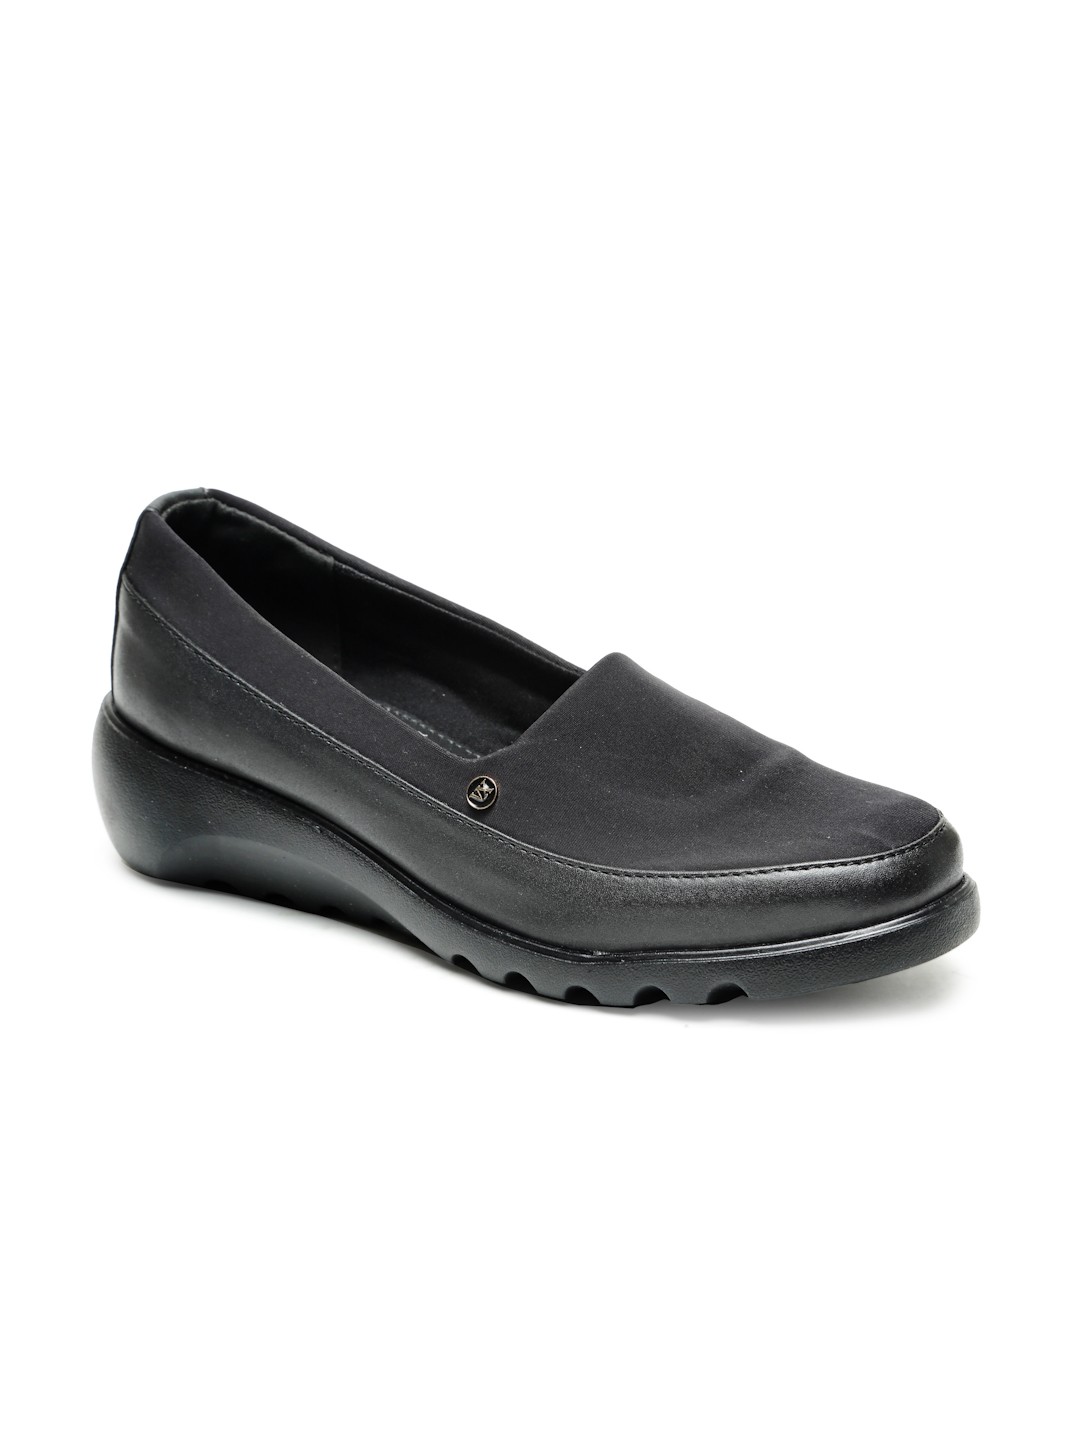 Buy Von Wellx Germany Comfort Women's Black Casual Shoes Elsa Online in Madhya Pradesh